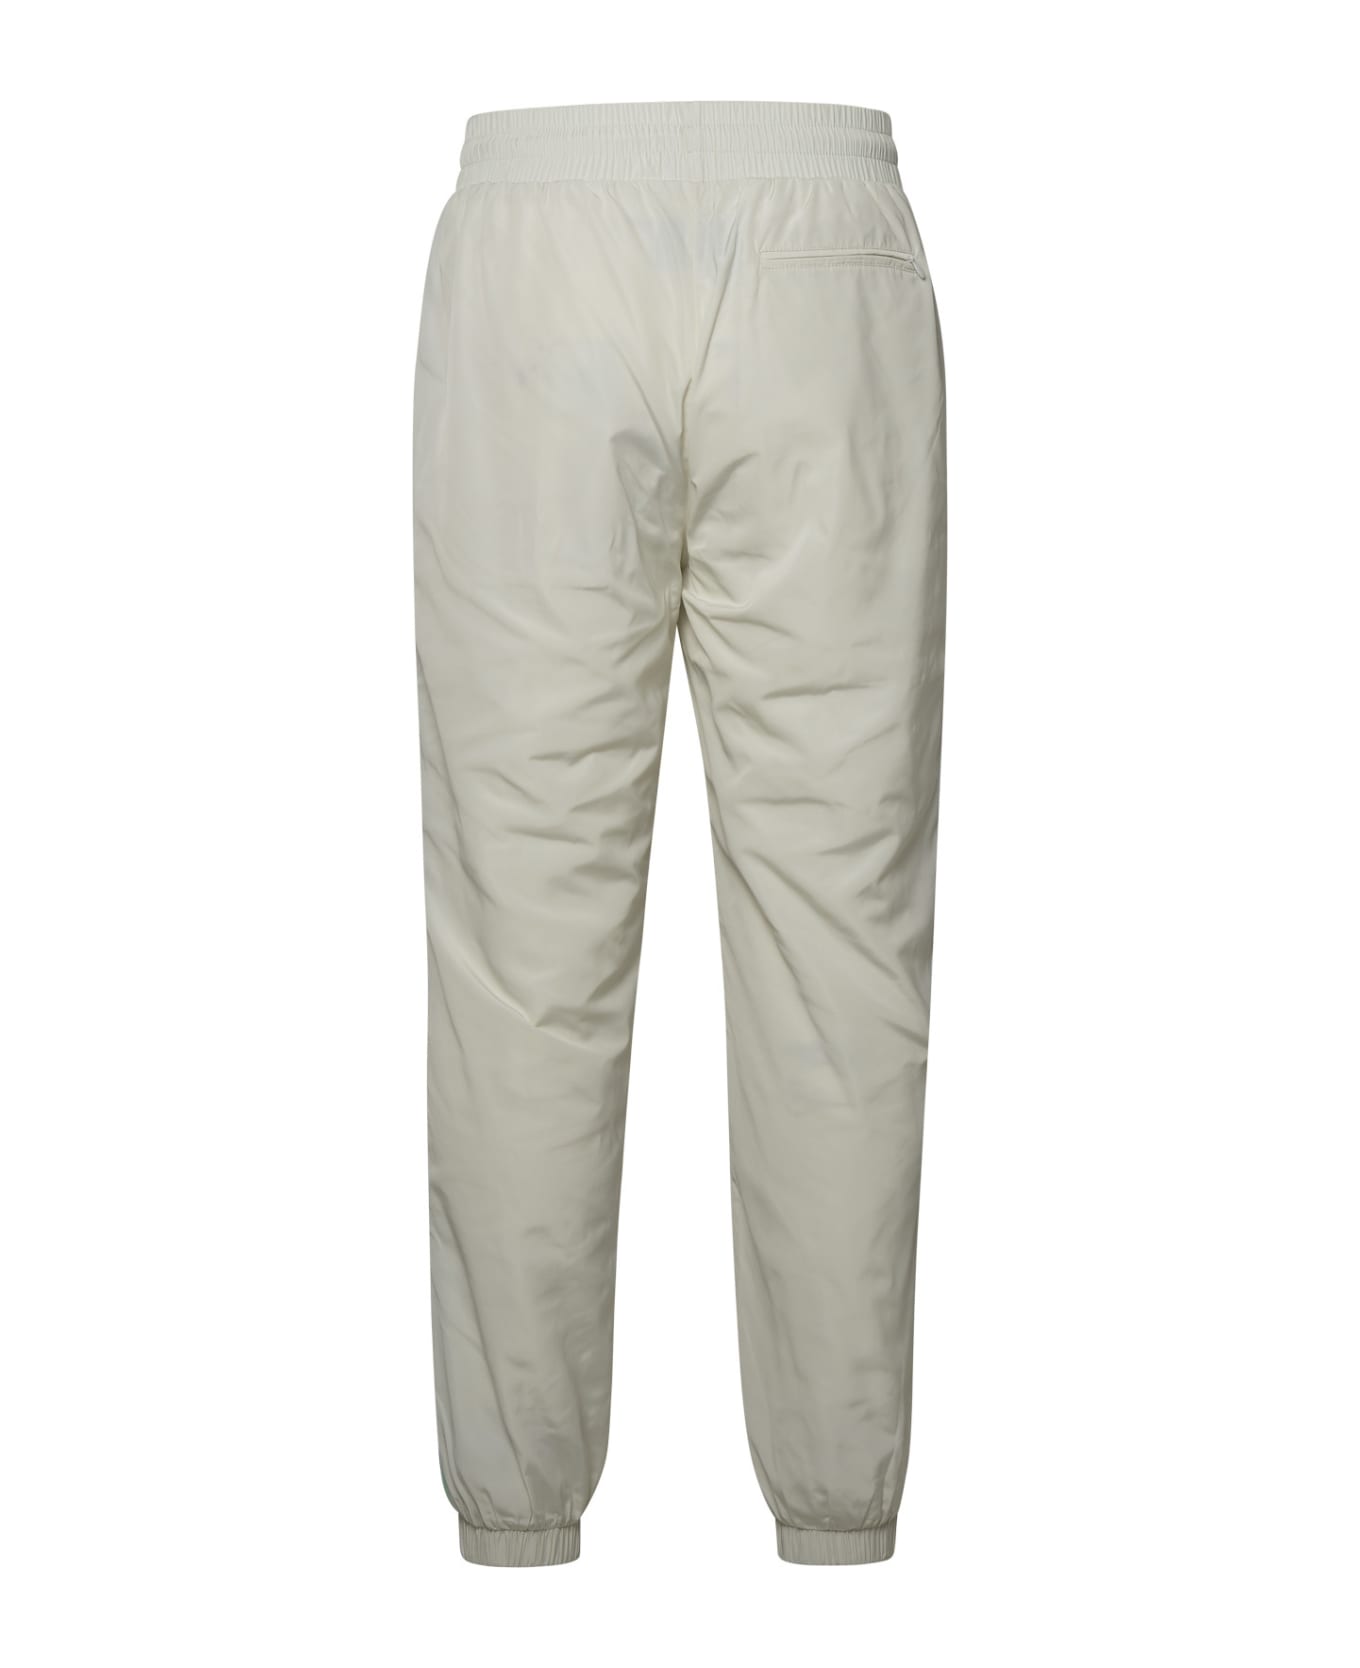 Casablanca White Polyester Pants - White